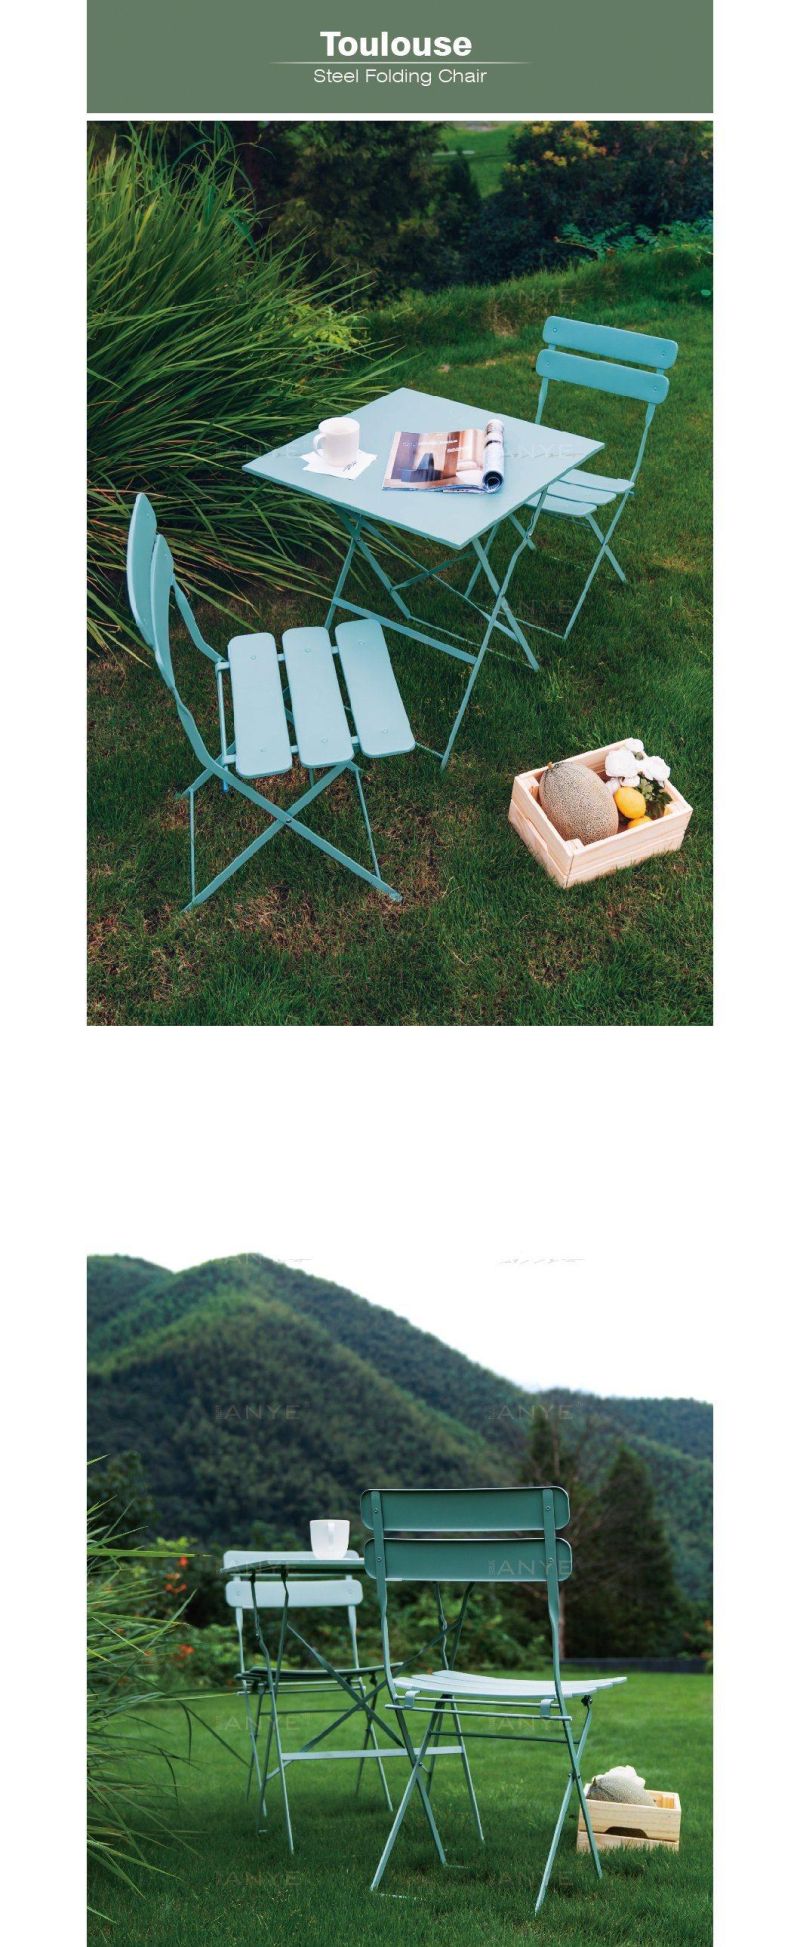 Rust Resistant Outdoor Chair Folding Metal Garden Chair Portable Bistro Furniture Restaurant Dining Chair